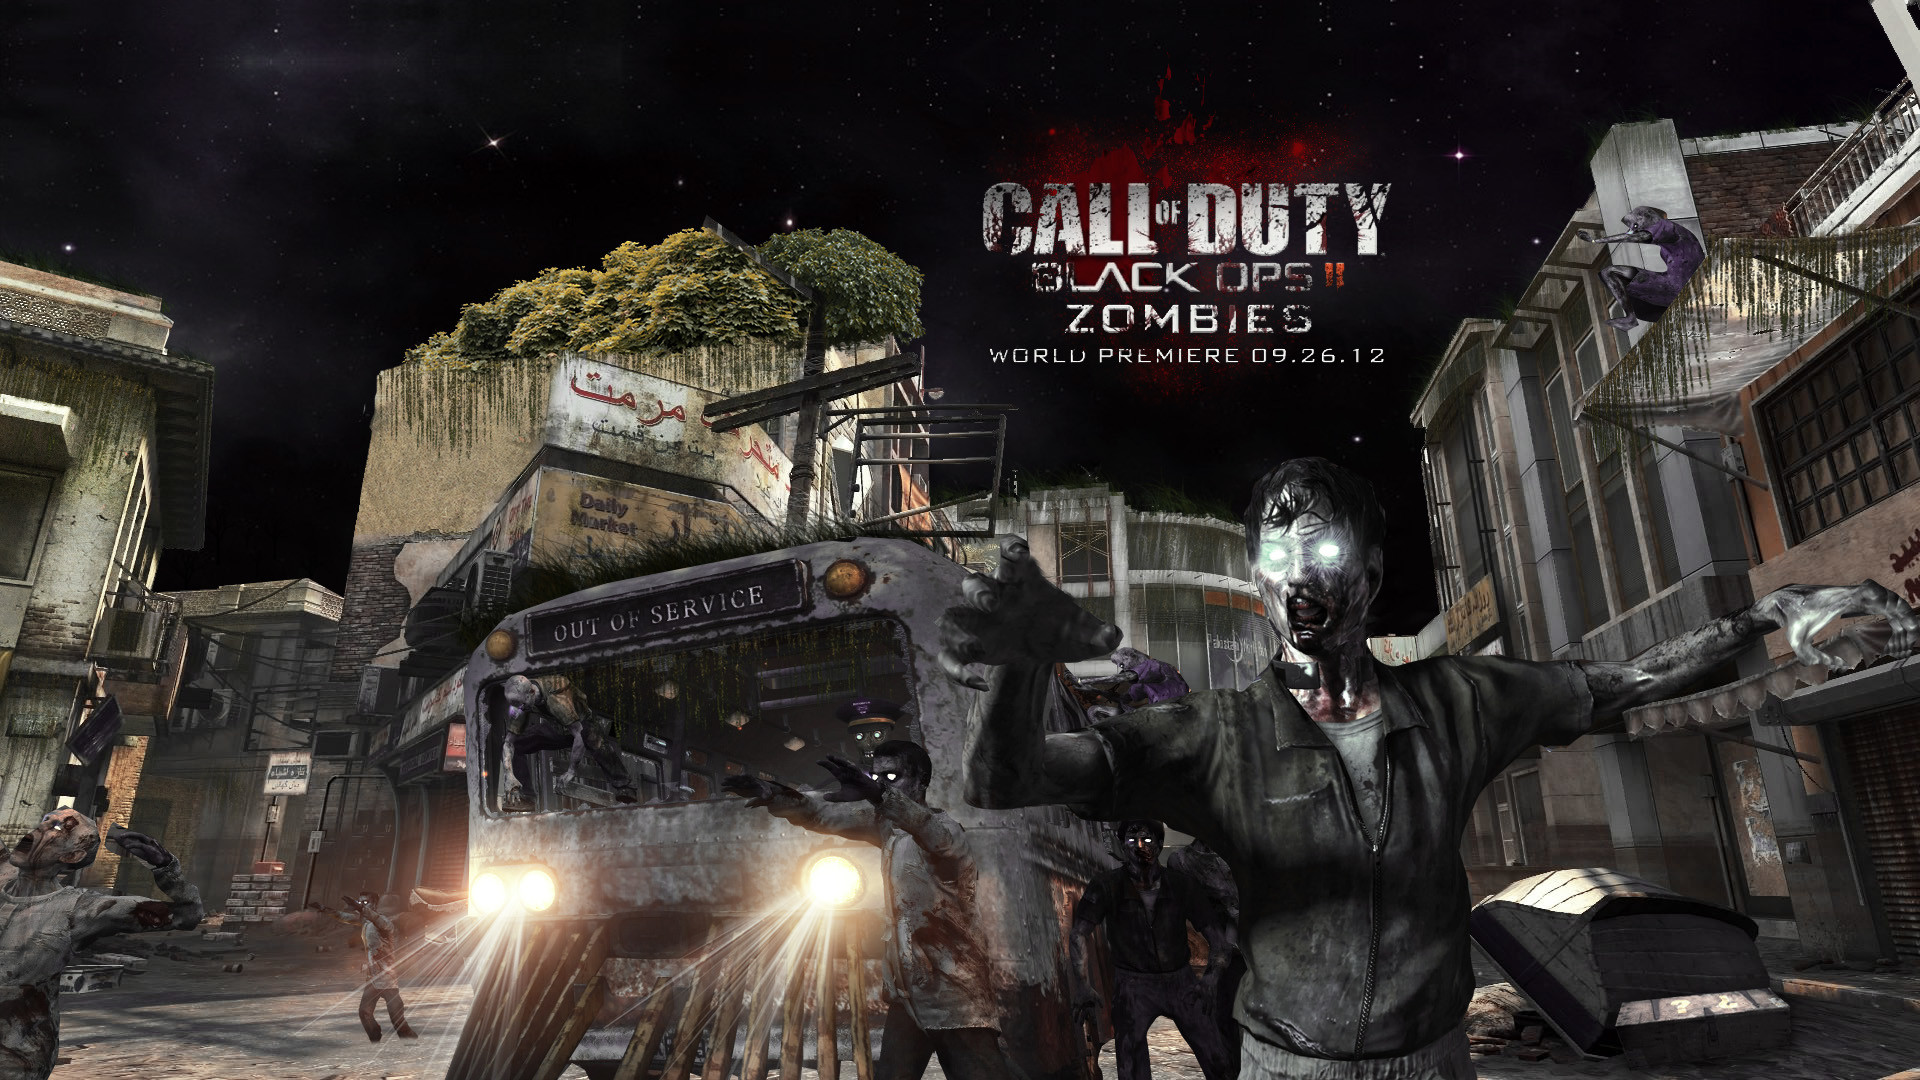 Black Ops Zombies Wallpaper 1080p ① Wallpapertag